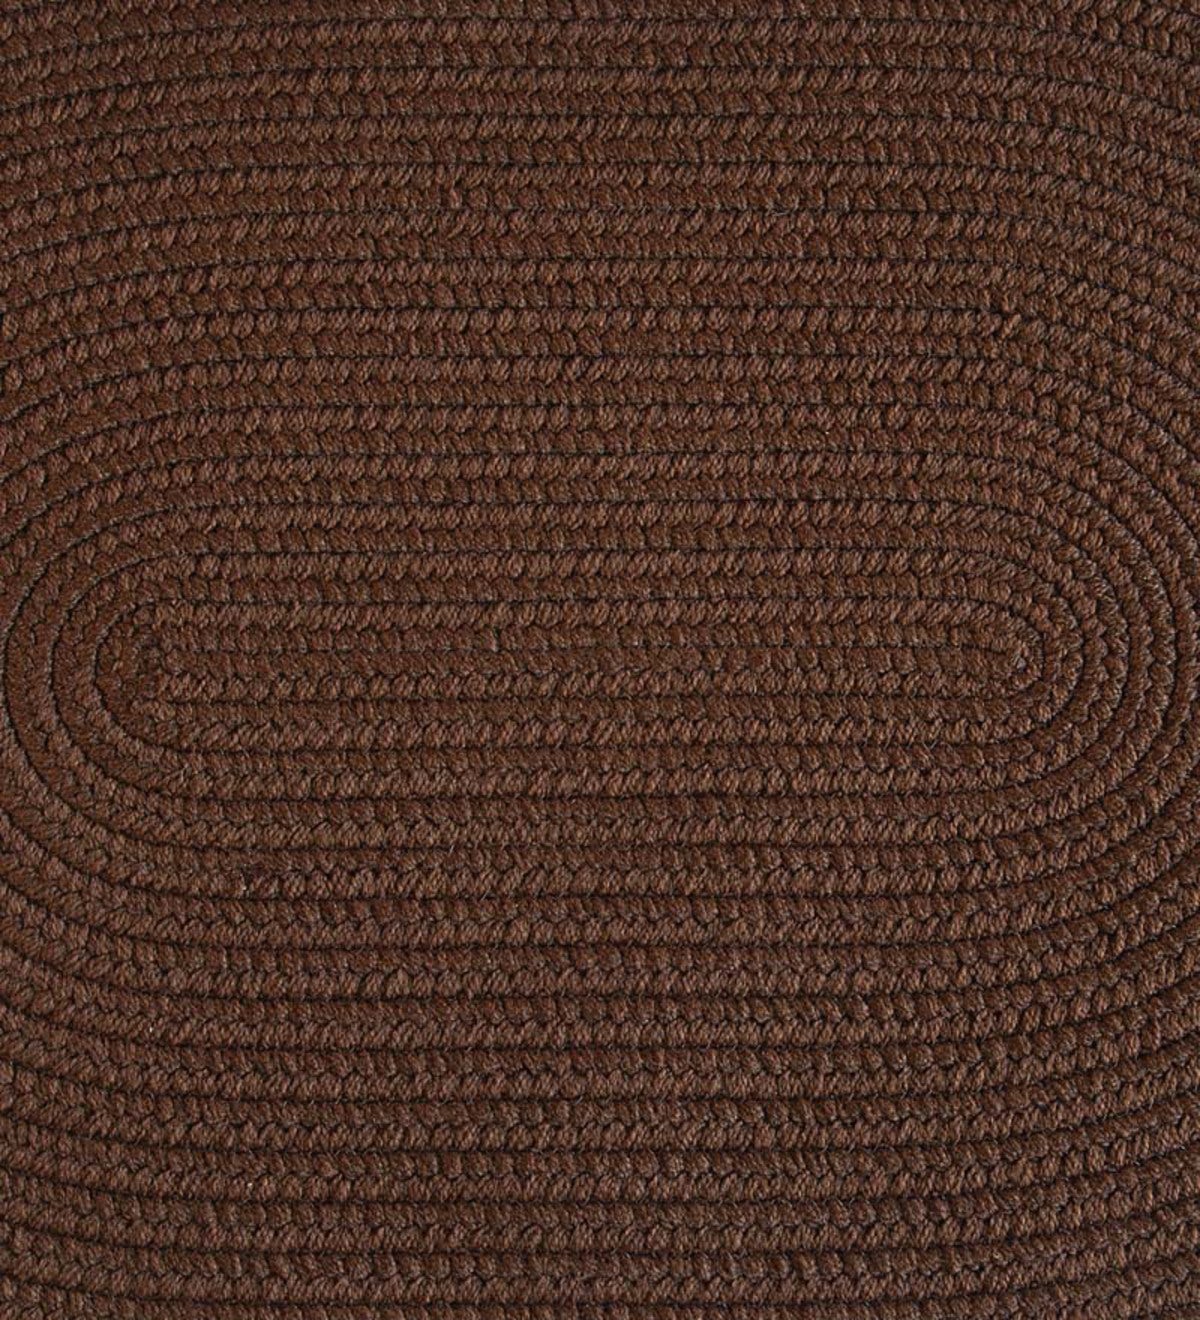 5'W x 8'L Braided Rug - Brown Solid